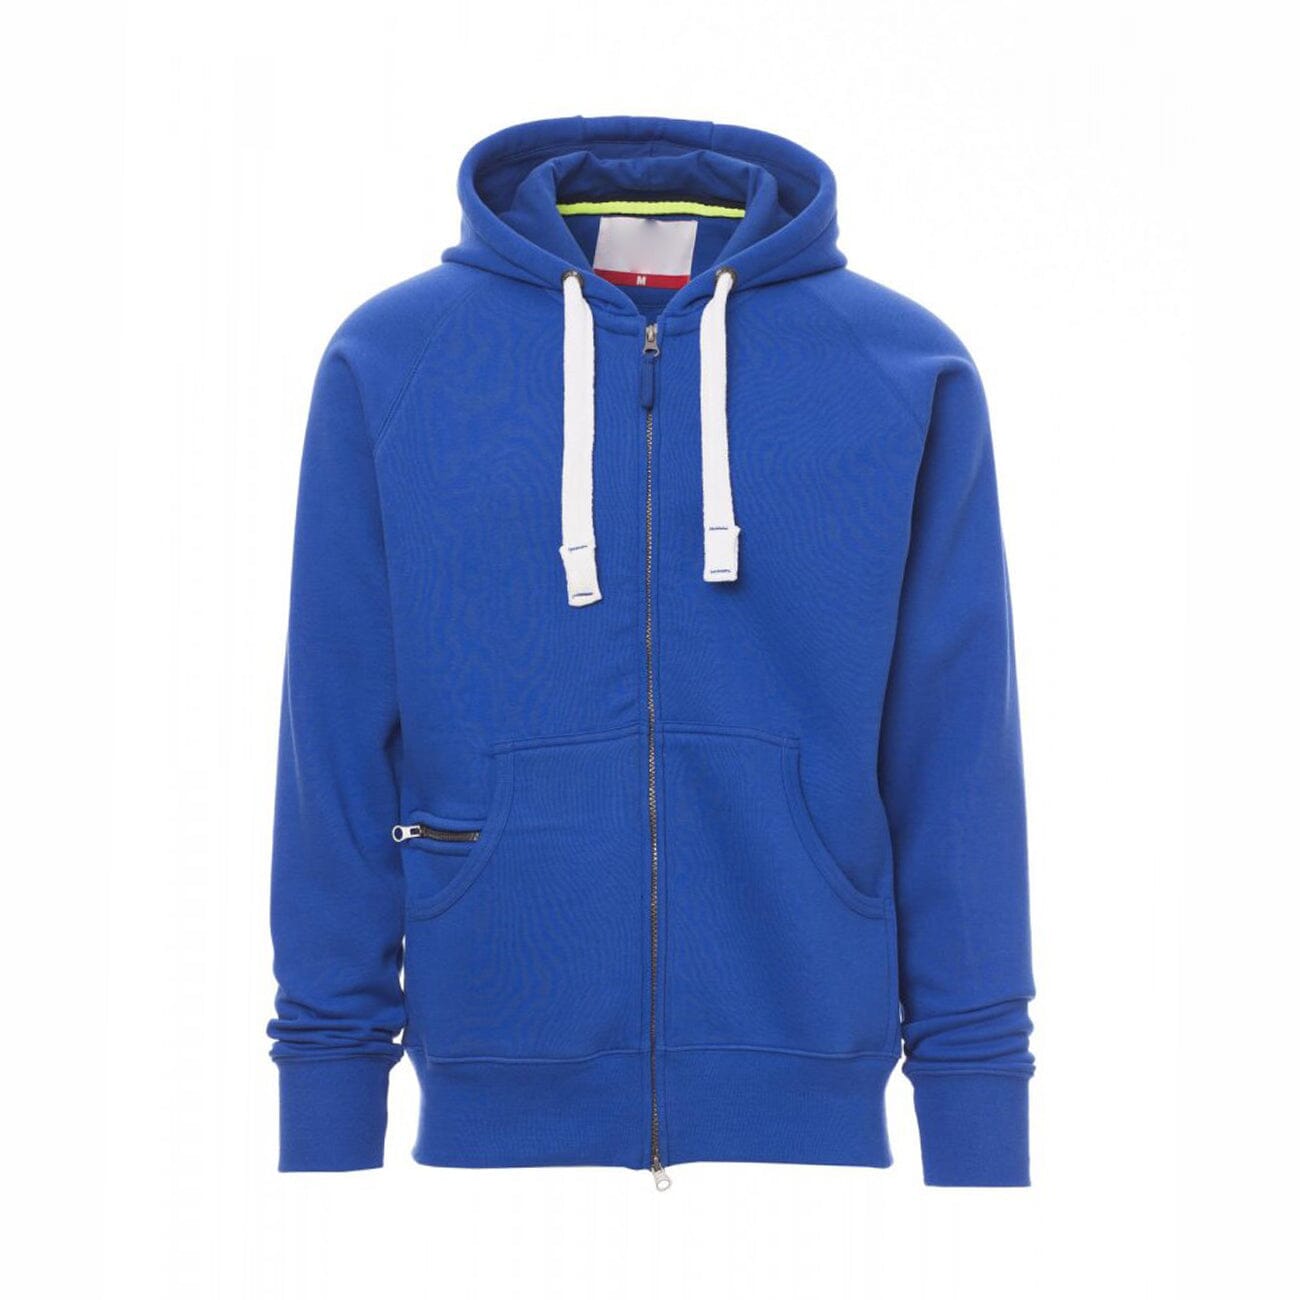 Premium Quality Blue Soft Fleece Zip-Up Jacket With Hoodie For Men (120225)